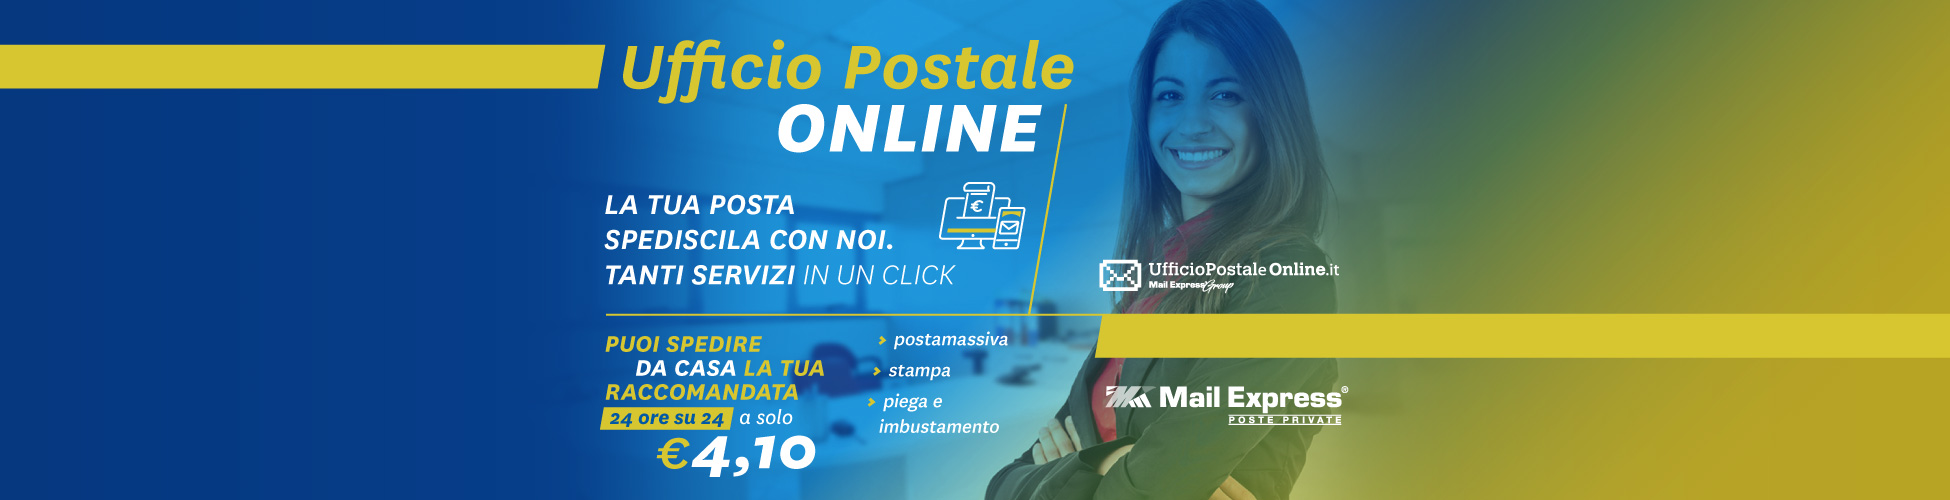 Ufficio Postale Online - Mailexpress.it